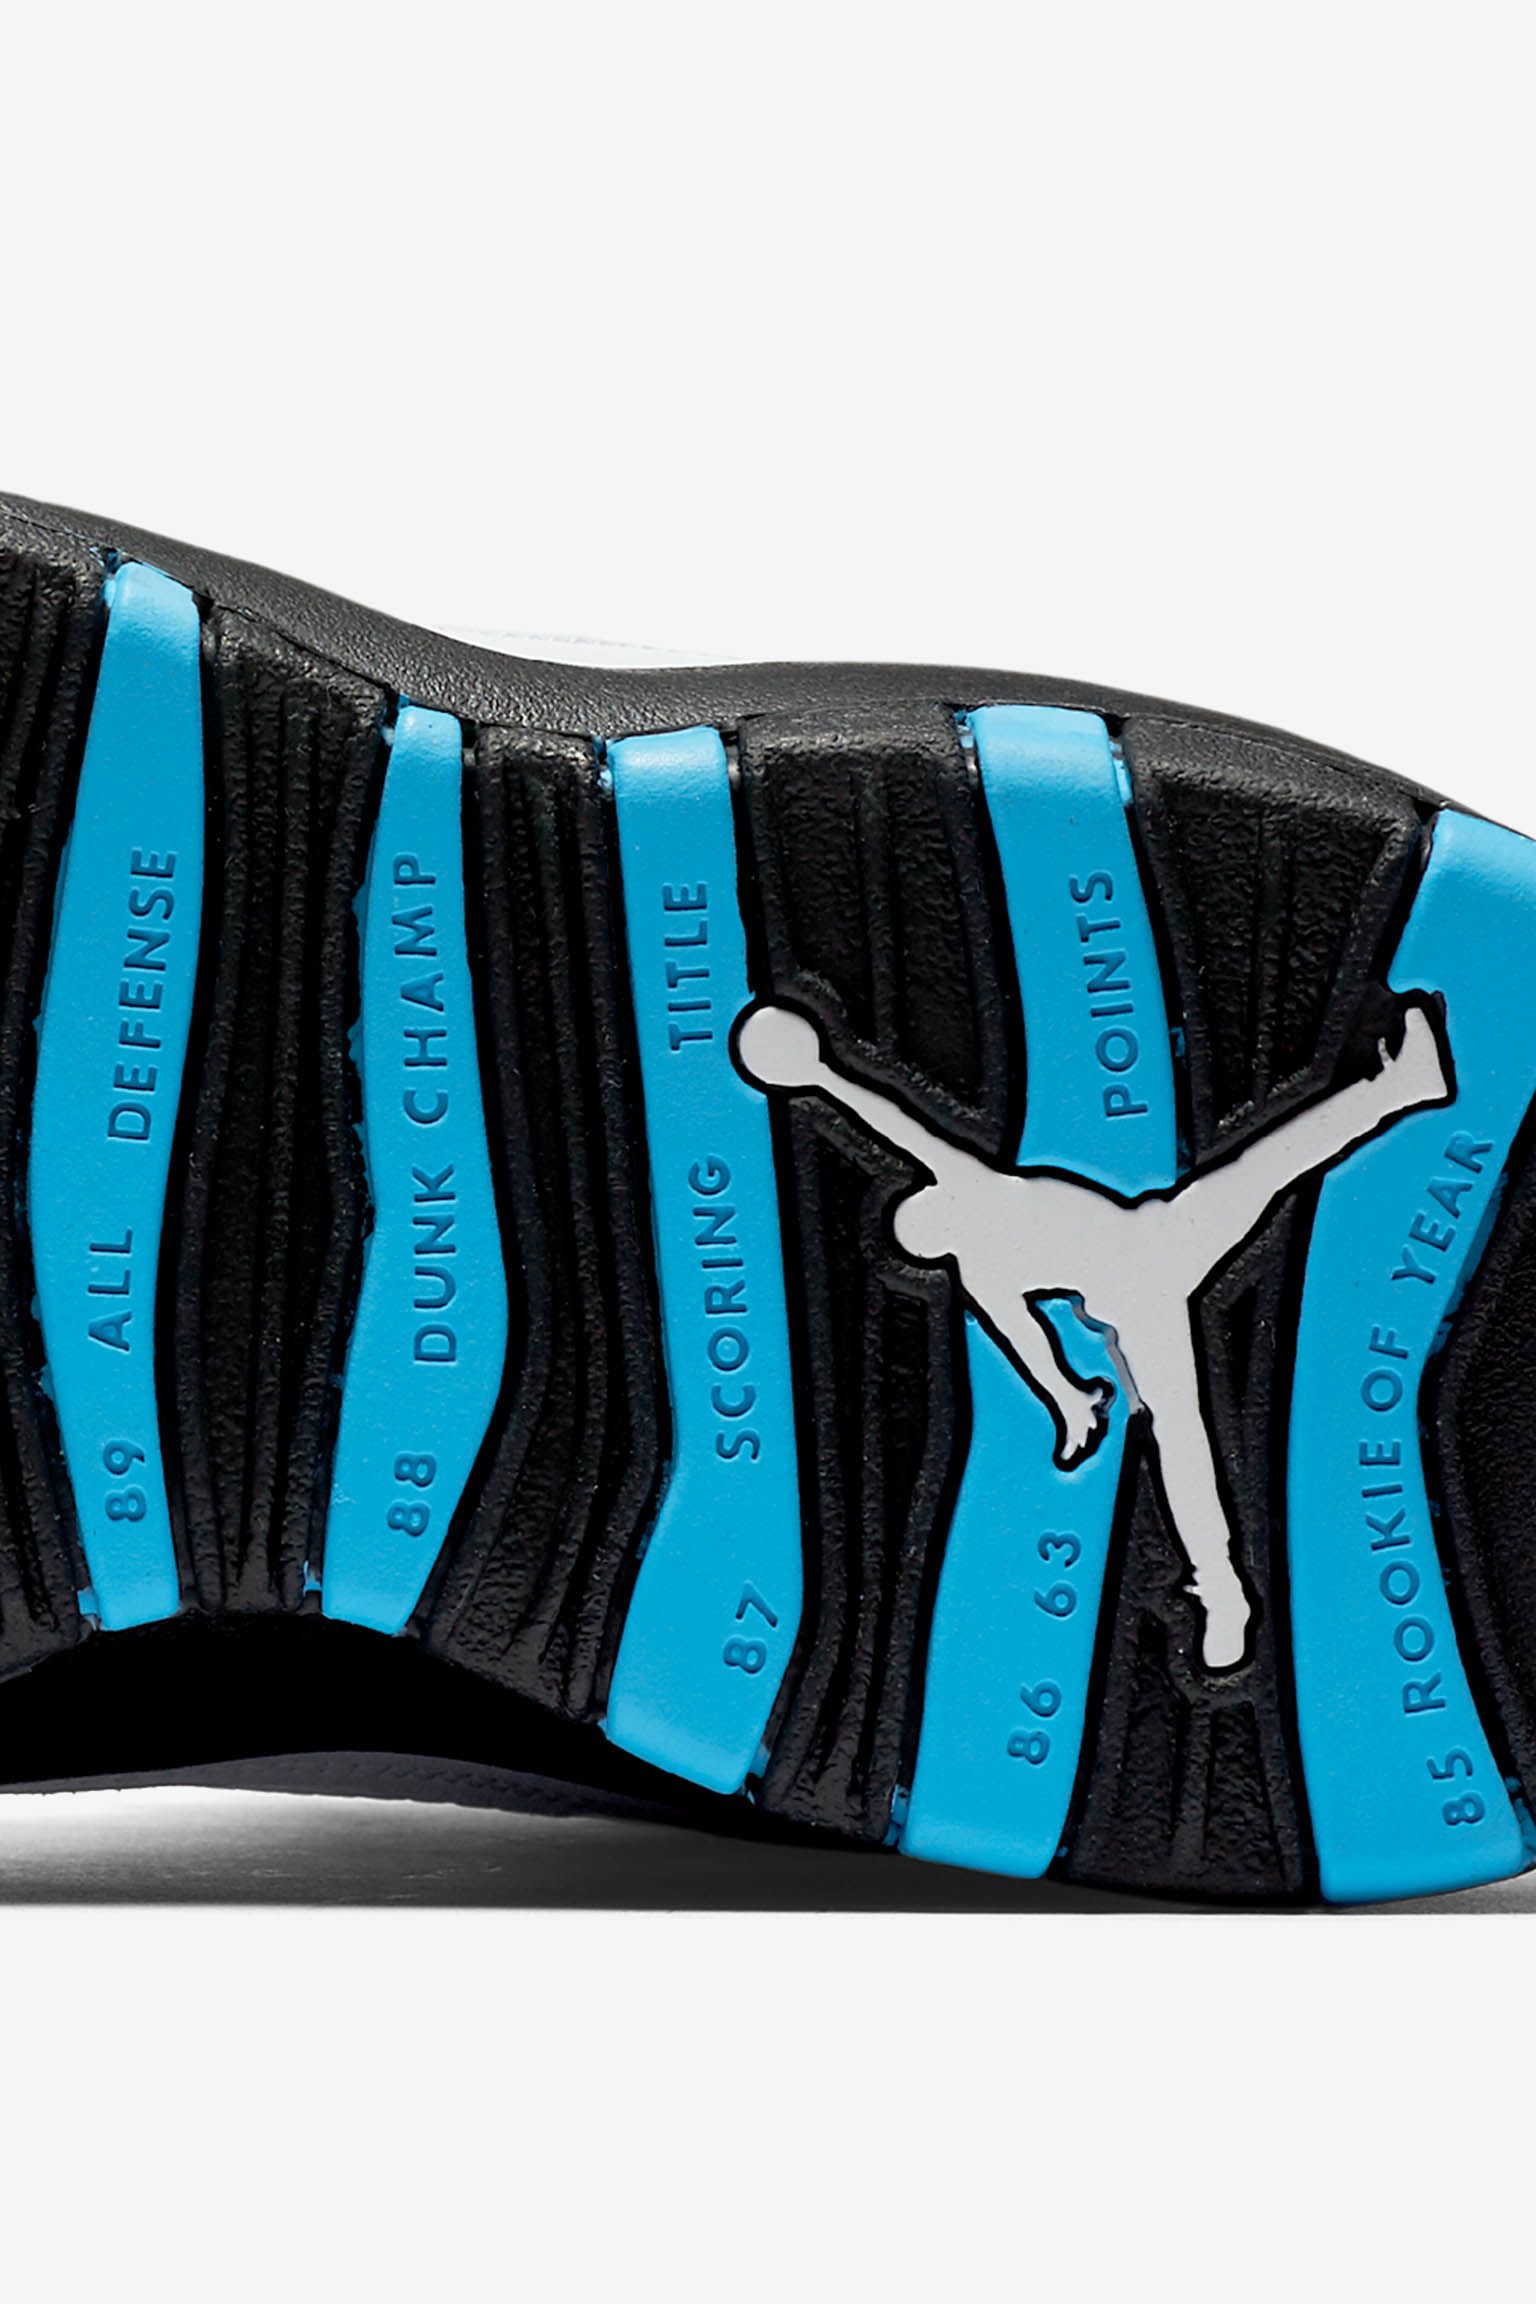 Air Jordan 10 Retro Powder Blue Data Premiery Nike Snkrs Pl